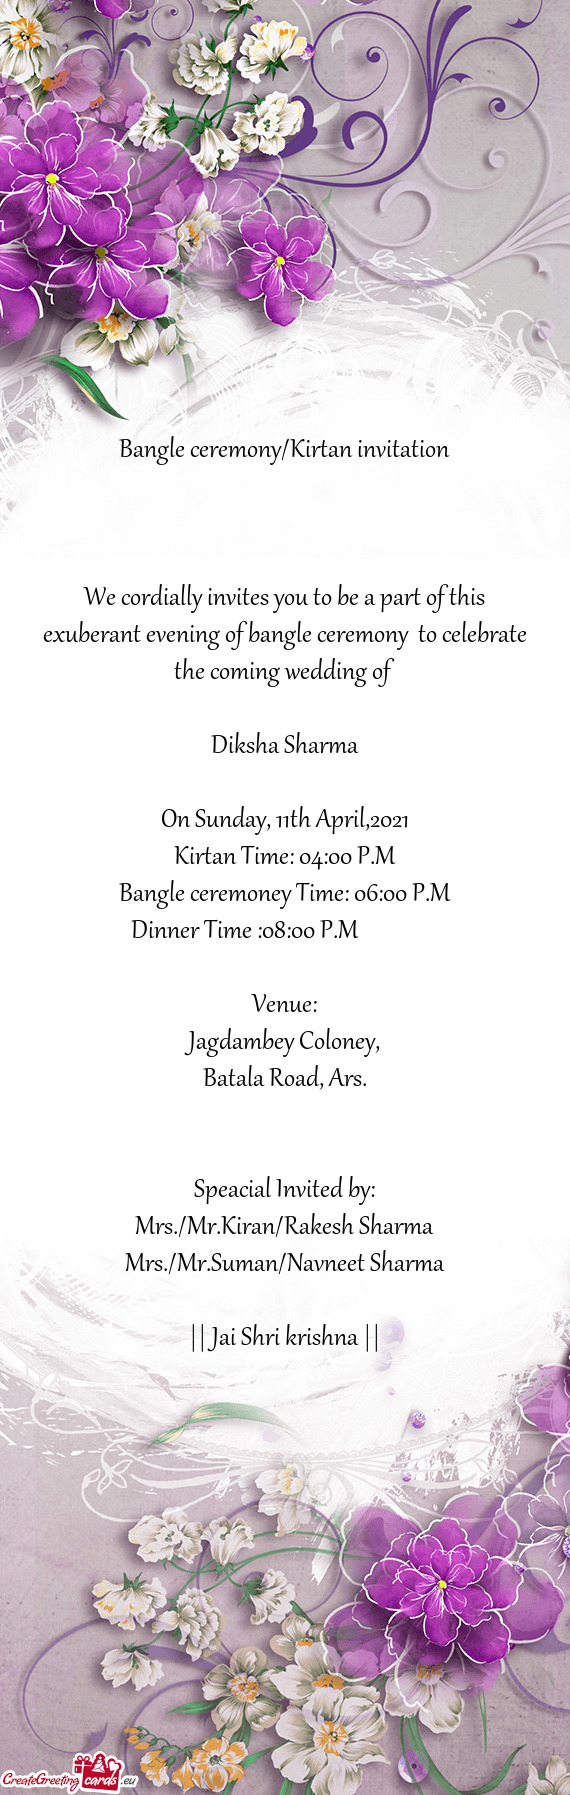 Bangle ceremoney Time: 06:00 P.M